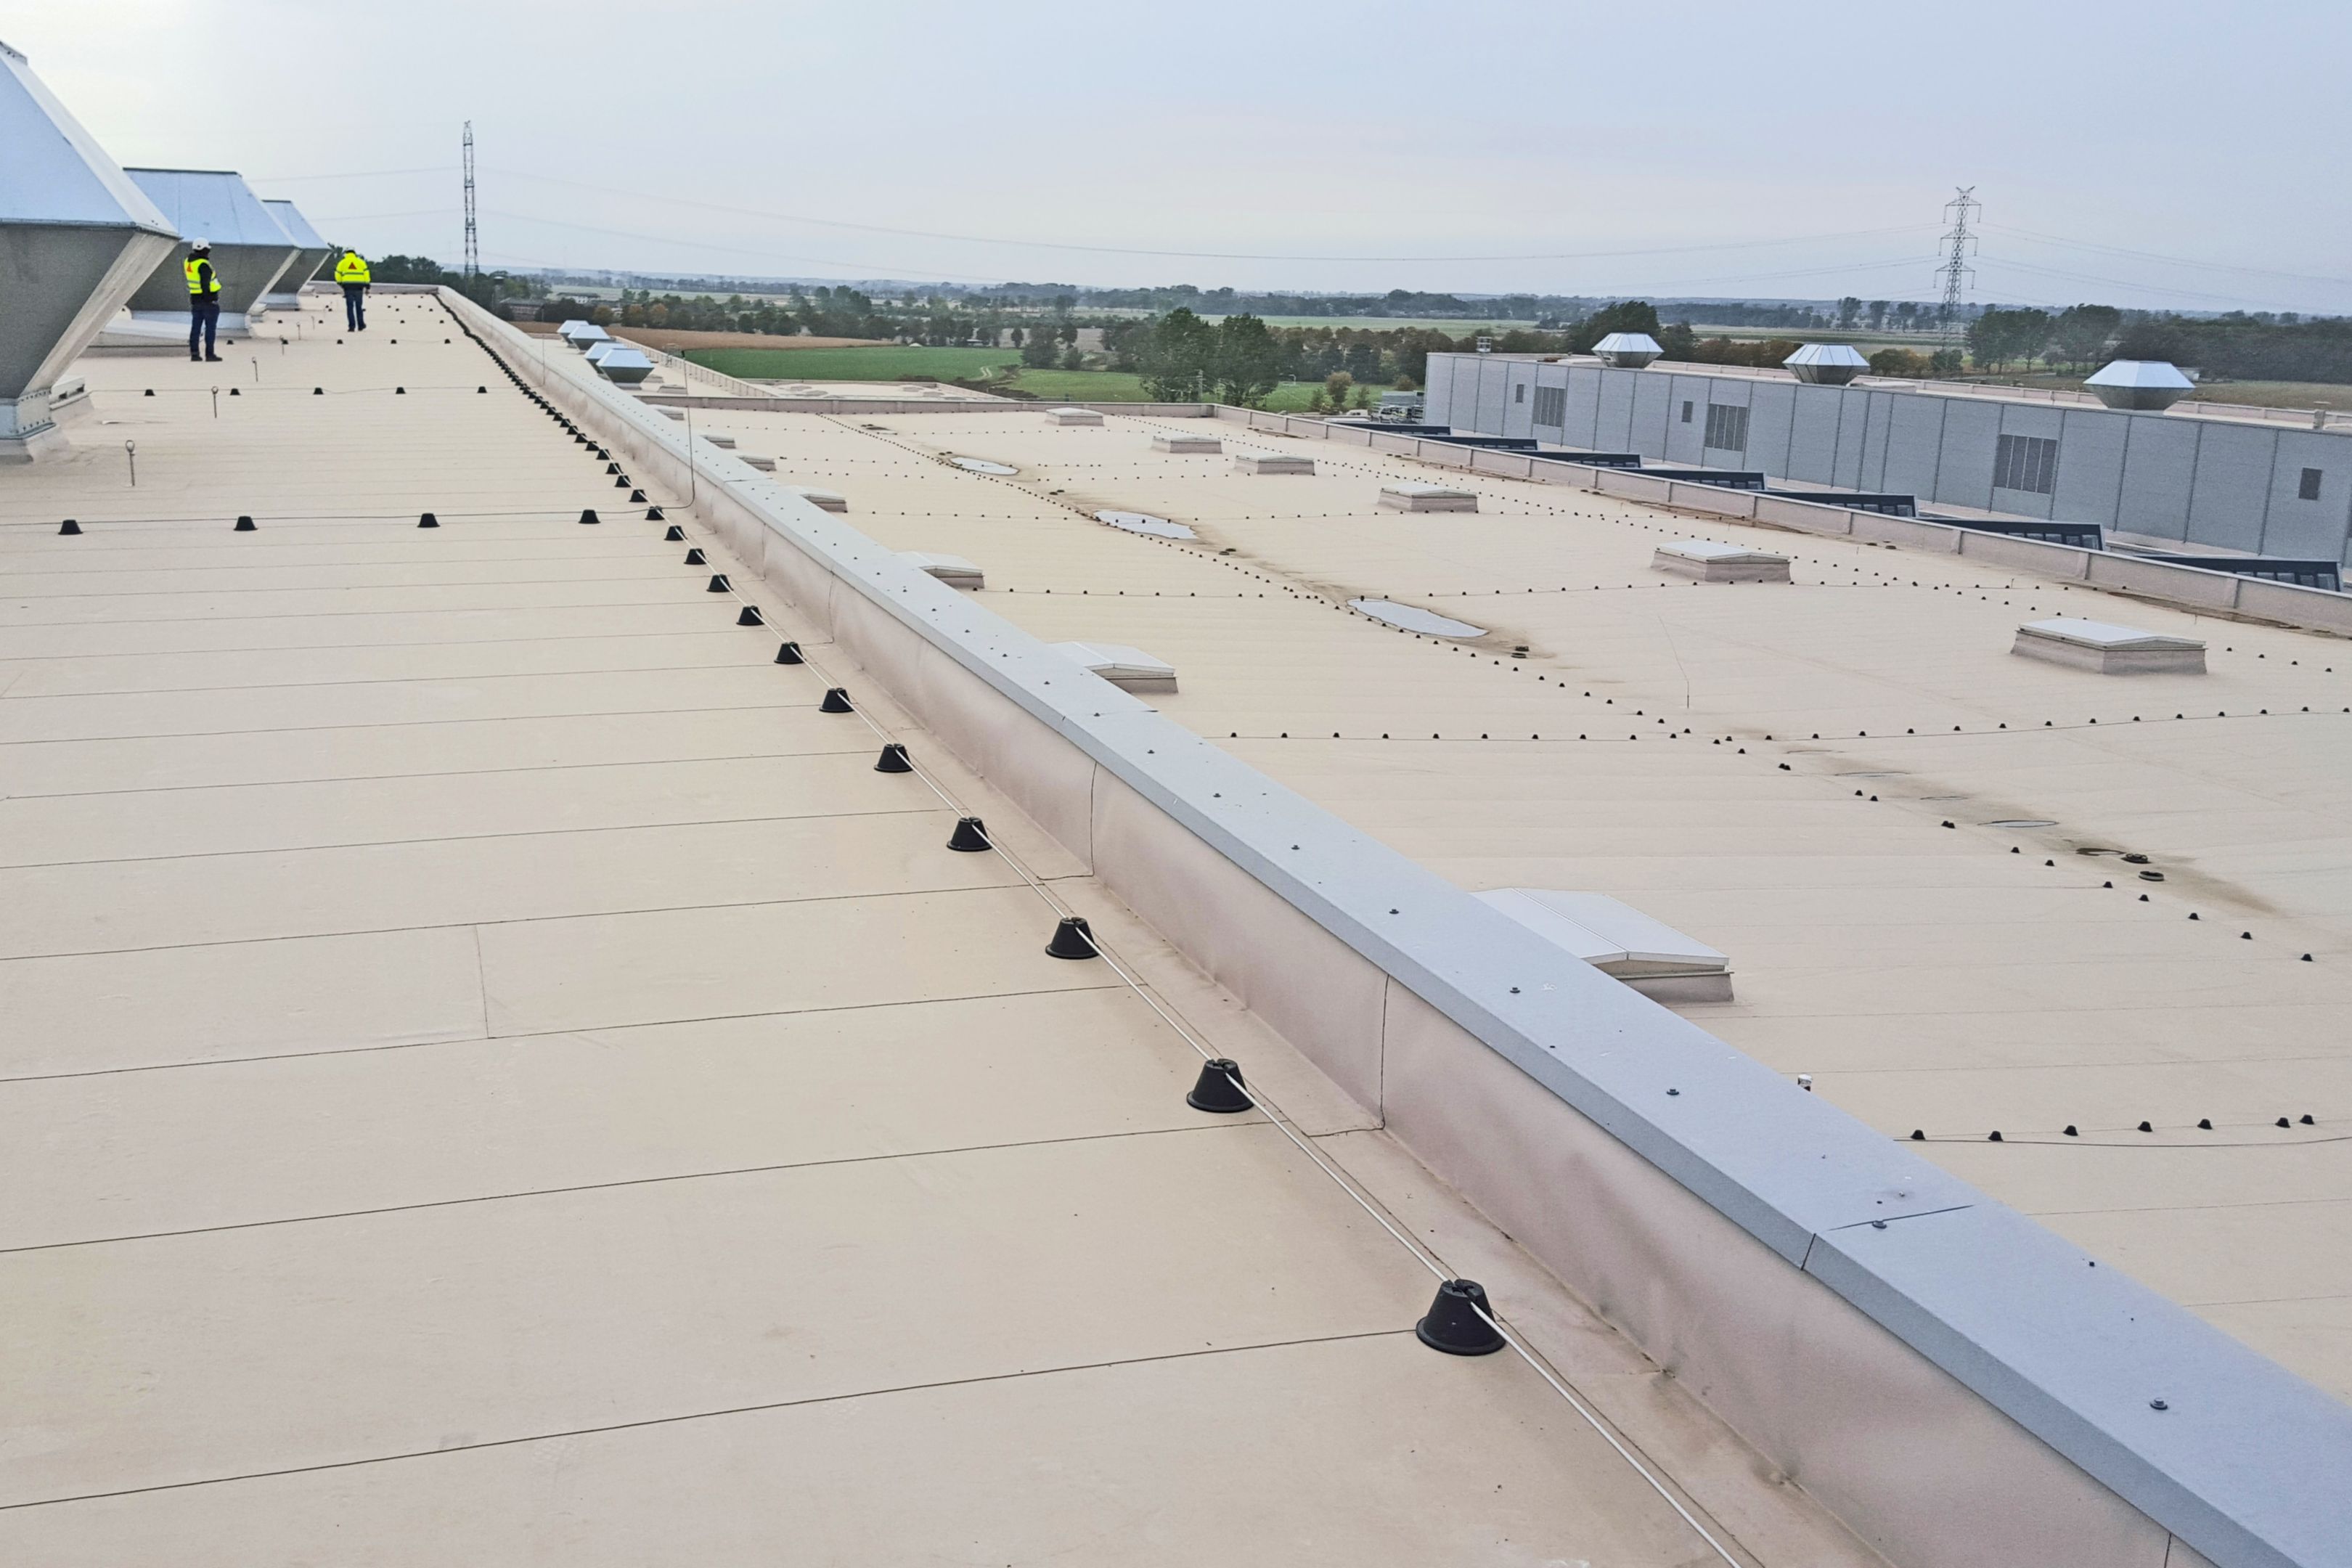 Sarnafil waterproofing membrane on all roofing areas on Volkswagen Plant in Wrzesnia